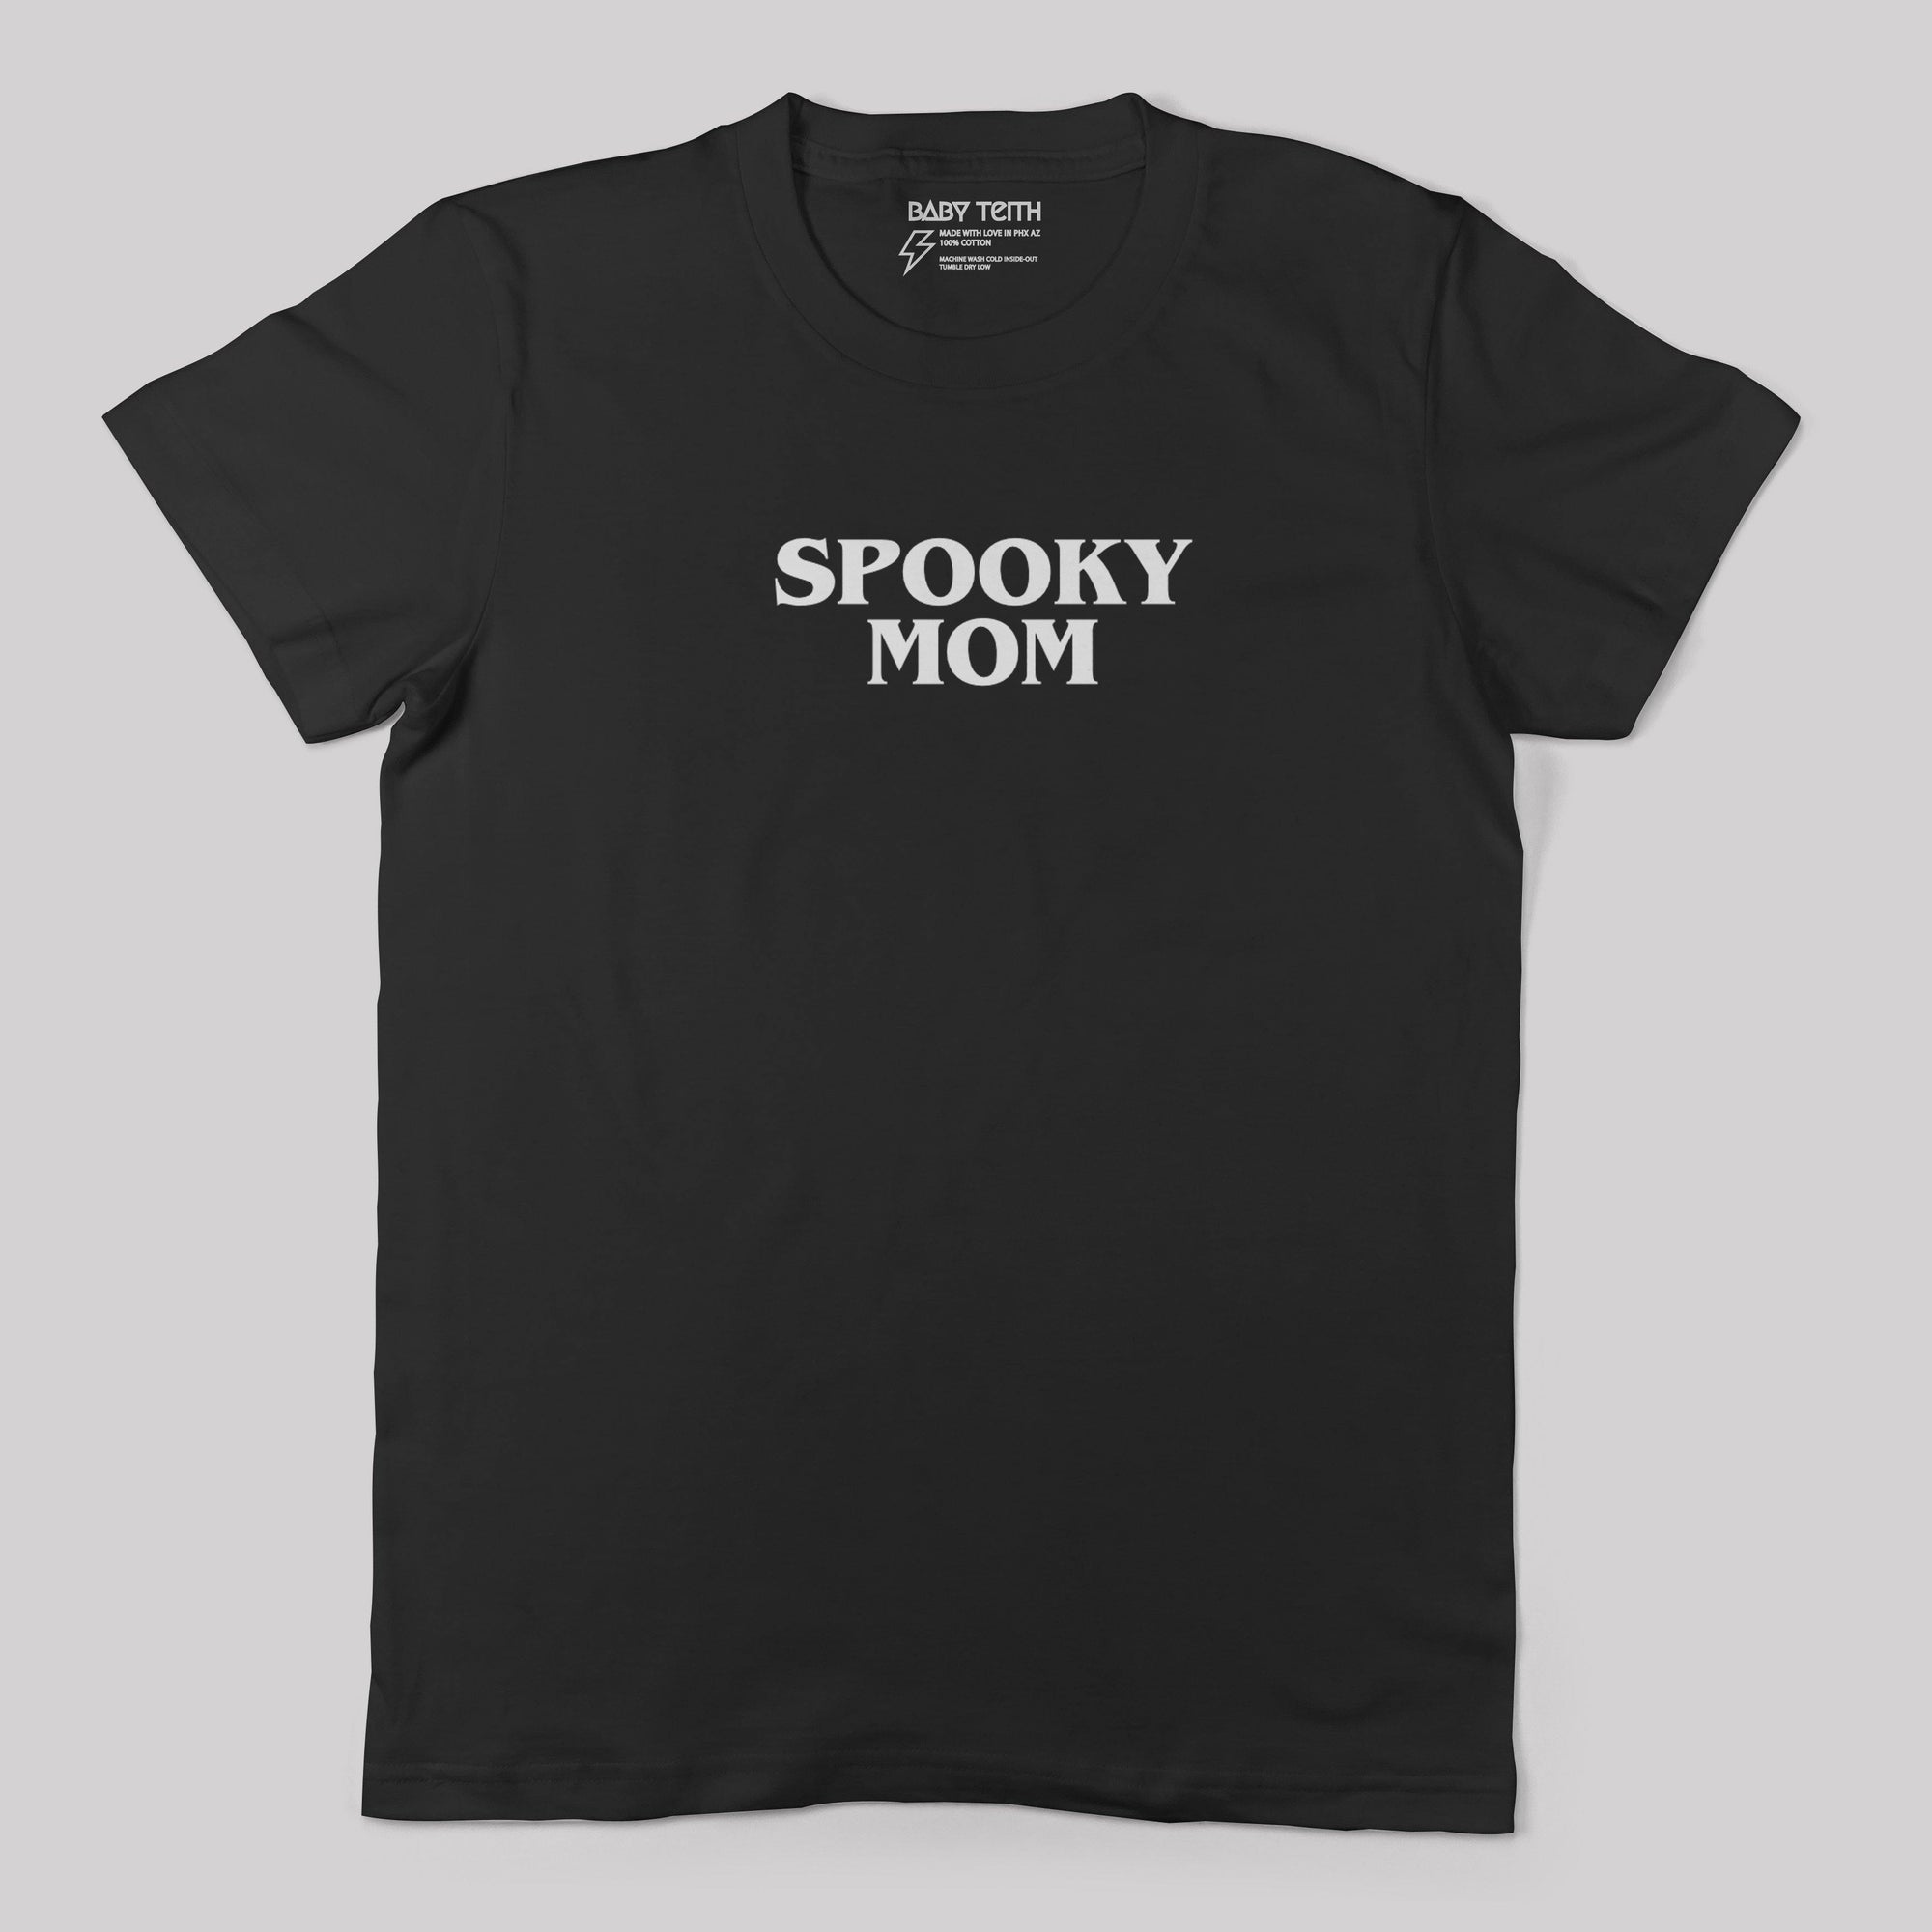 Spooky Mom Tee - Baby Teith